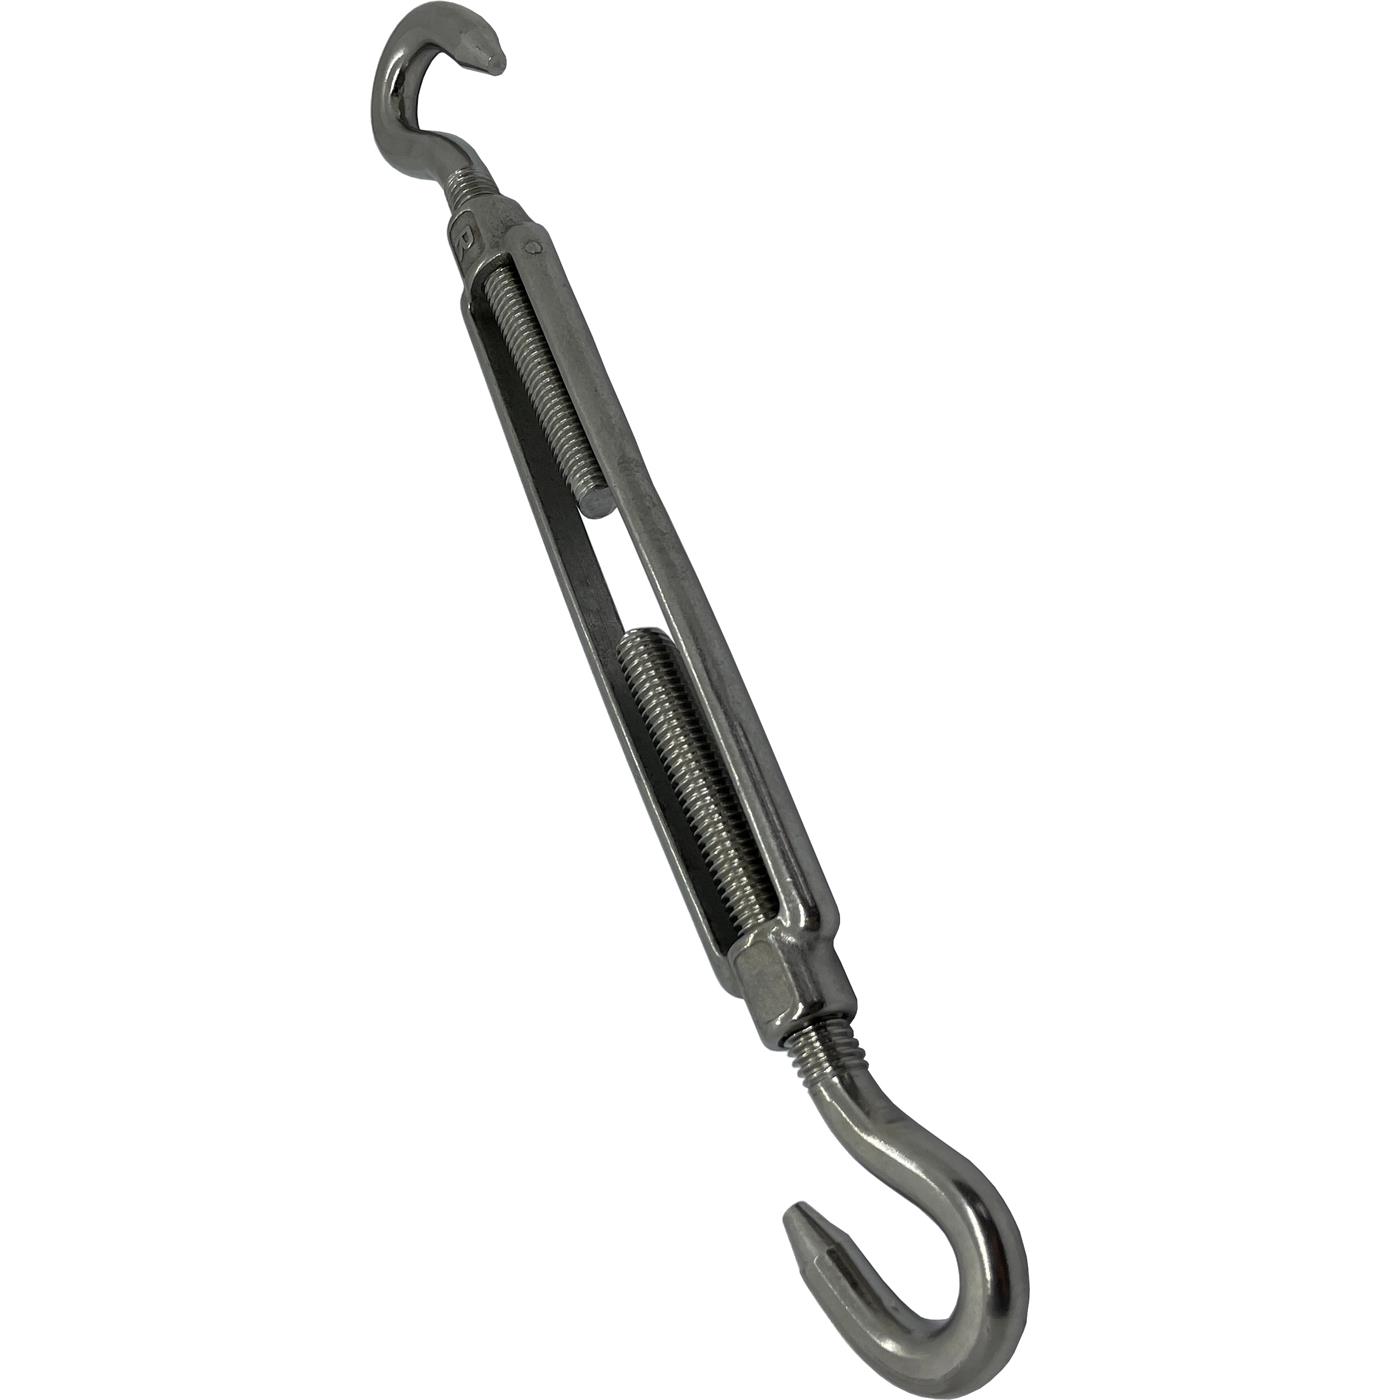 Rope tensioner Hook-Hook Stainless steel V2A 304 M12 Turnbuckle Shroud clamp